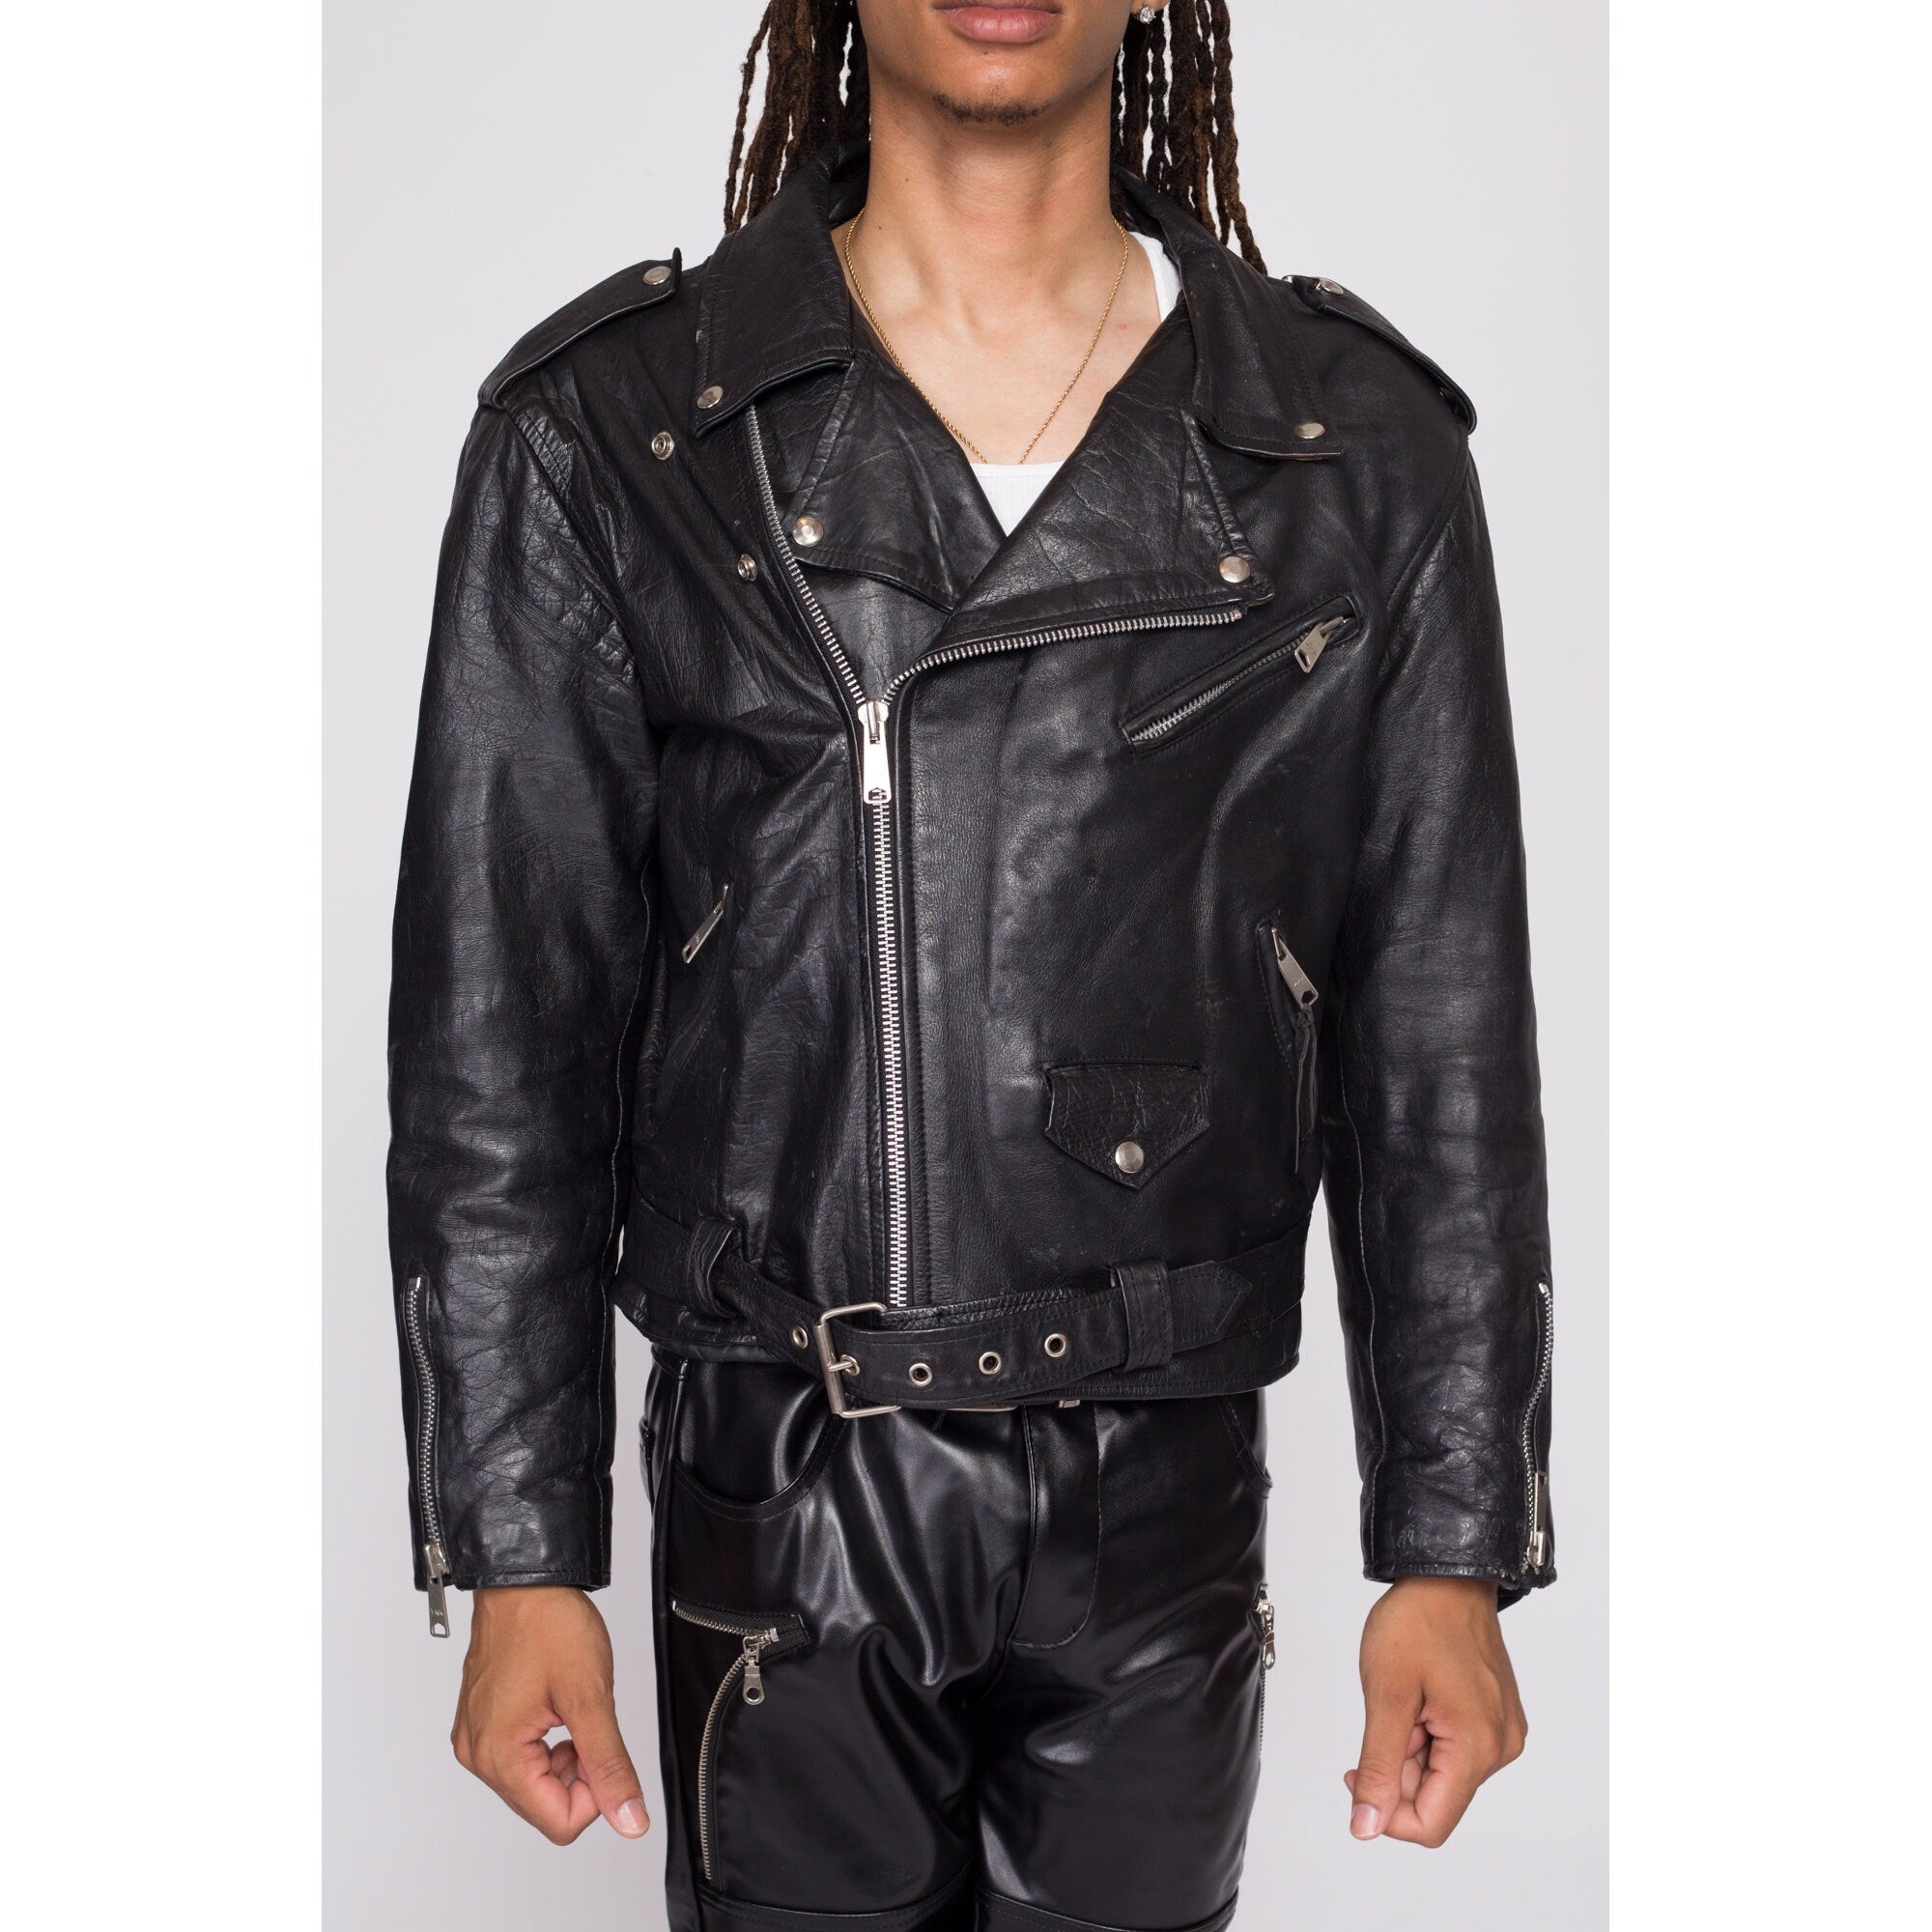 80s Harley Davidson Leather Motorcycle Jacket - Men's Large, Size 44